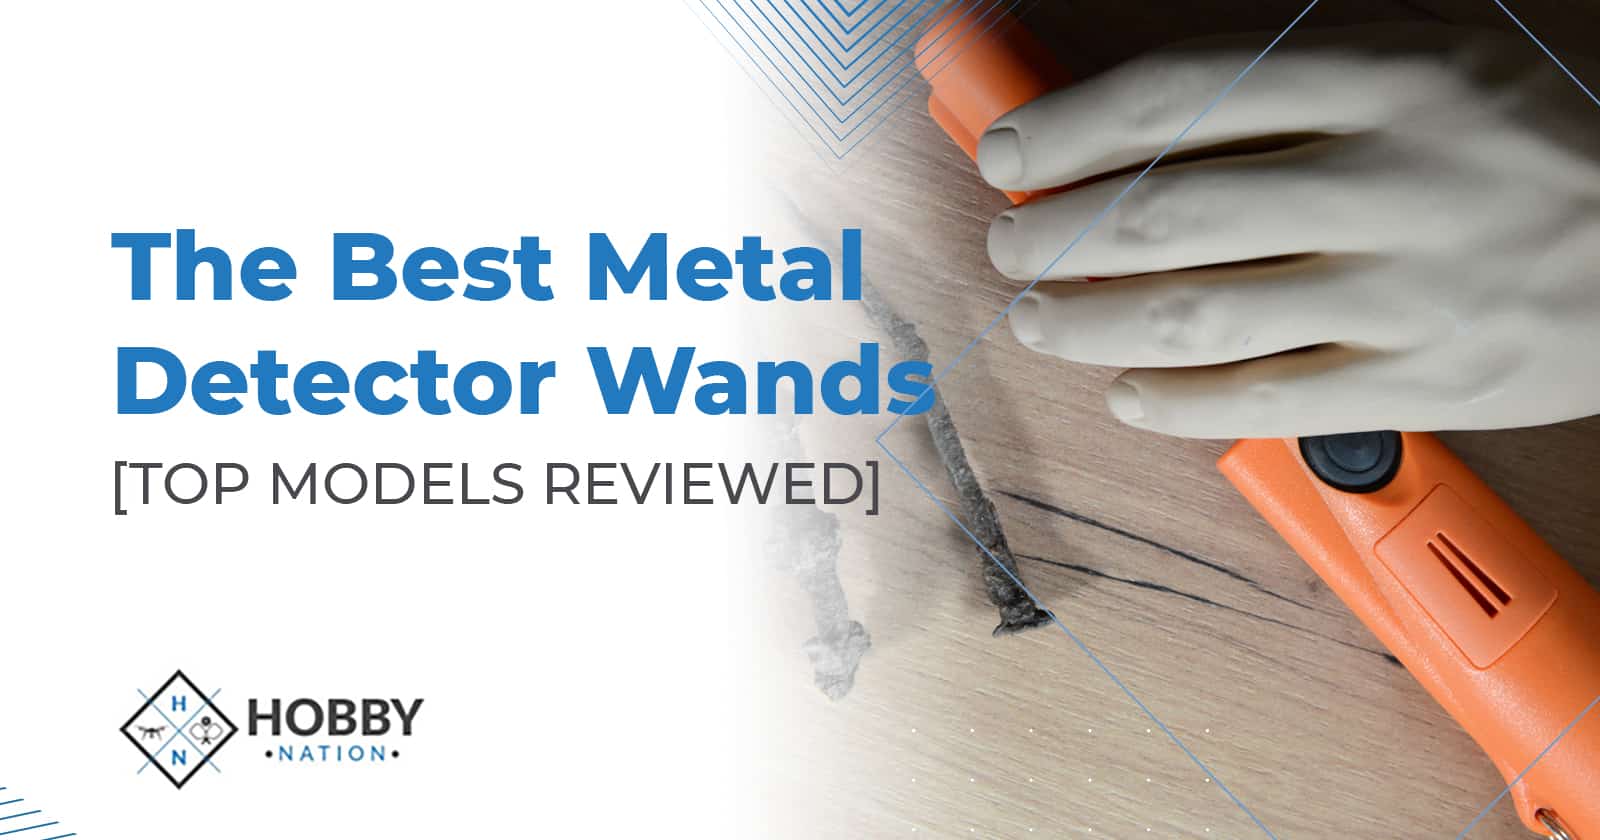 The Best Metal Detector Wands [TOP MODELS REVIEWED]